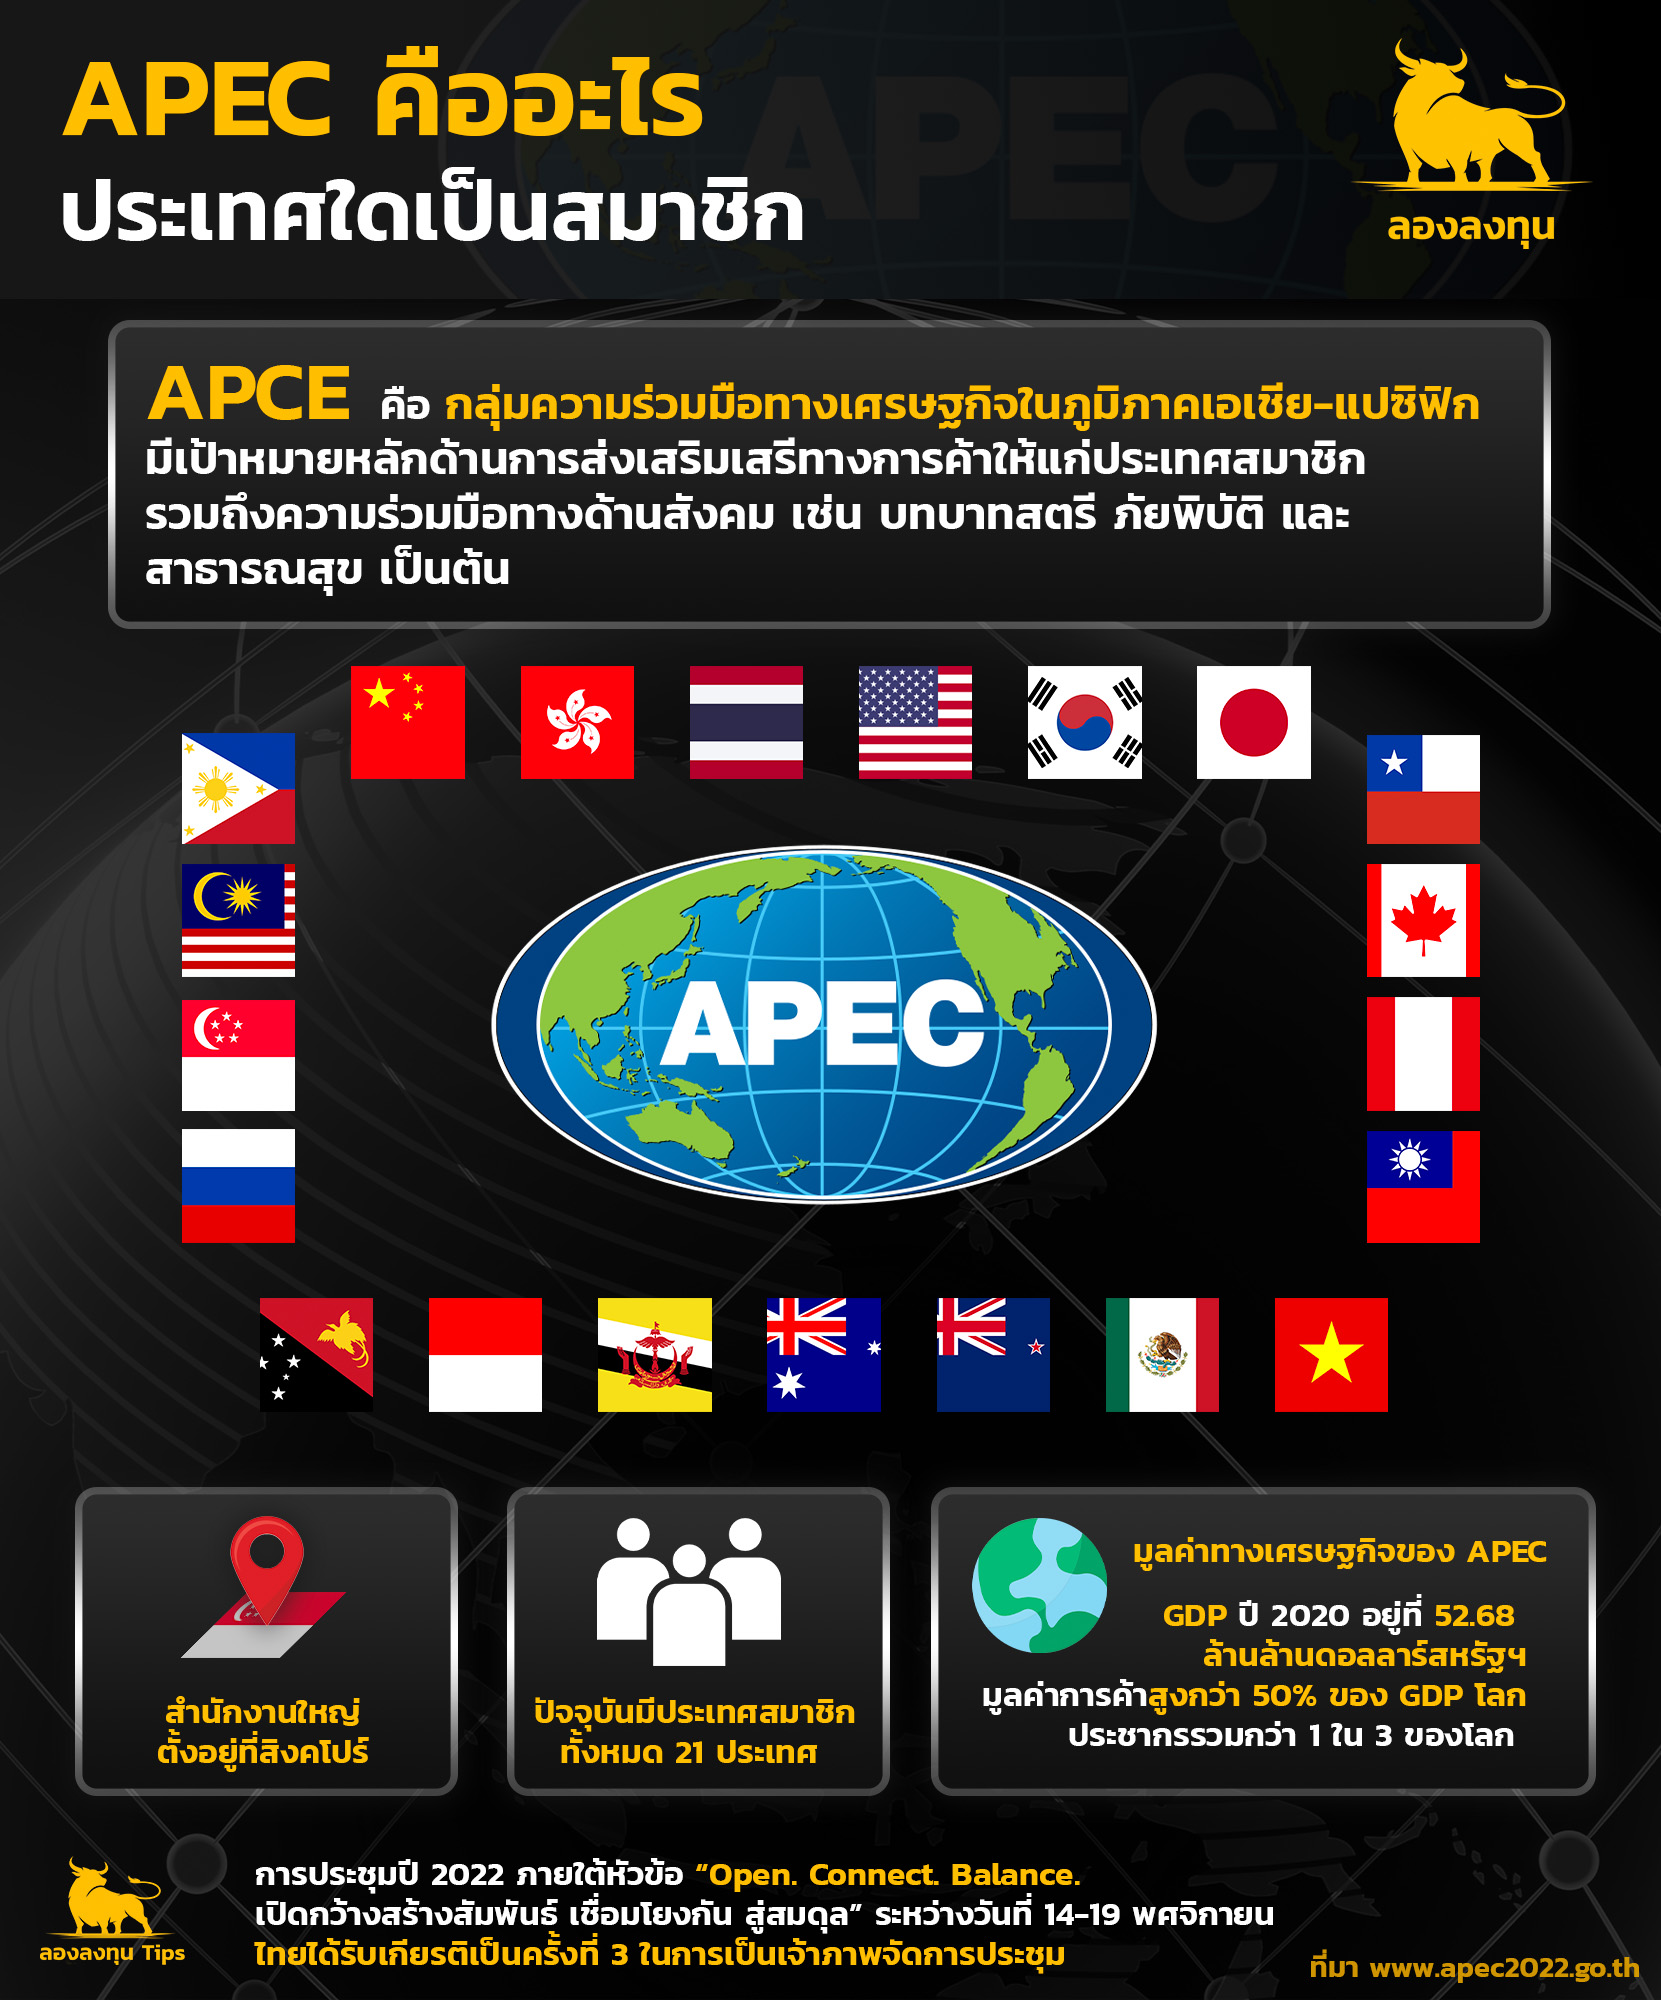 APEC คือ ? ประเทศใดเป็นสมาชิก